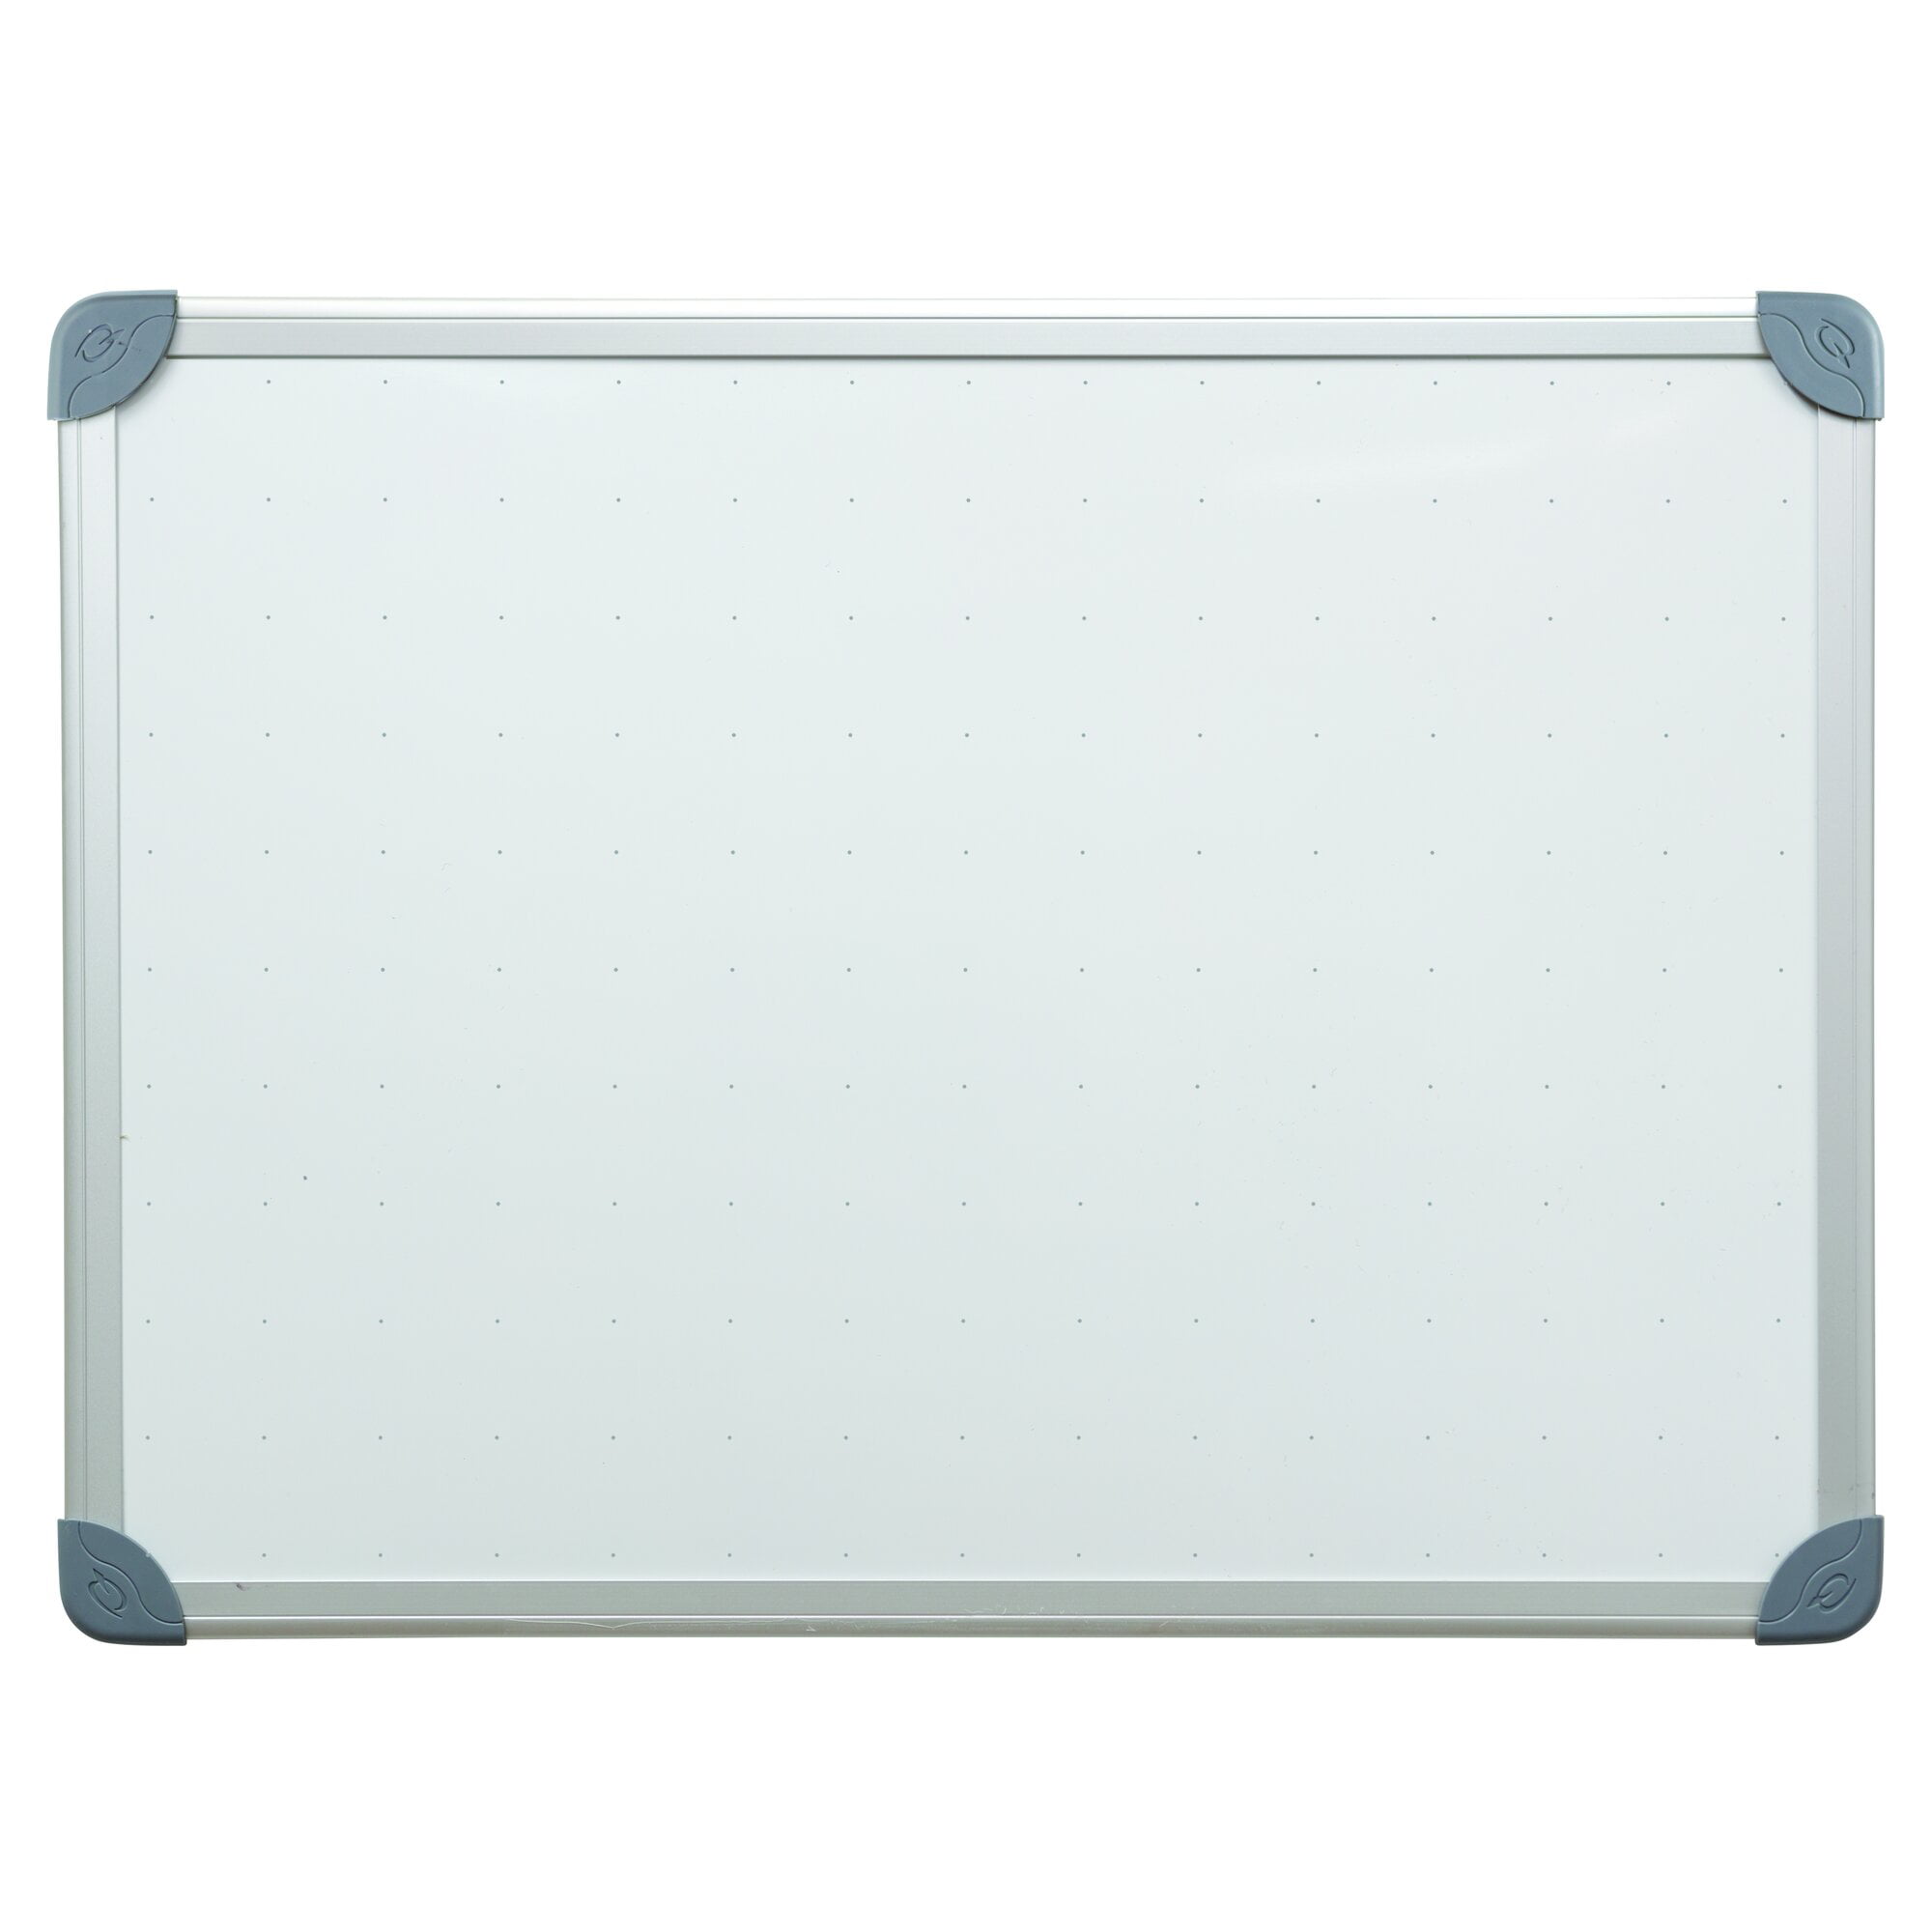 21*15cm Whiteboard Writing Board Magnetic Fridge Erasable Message Memo Pad KW 